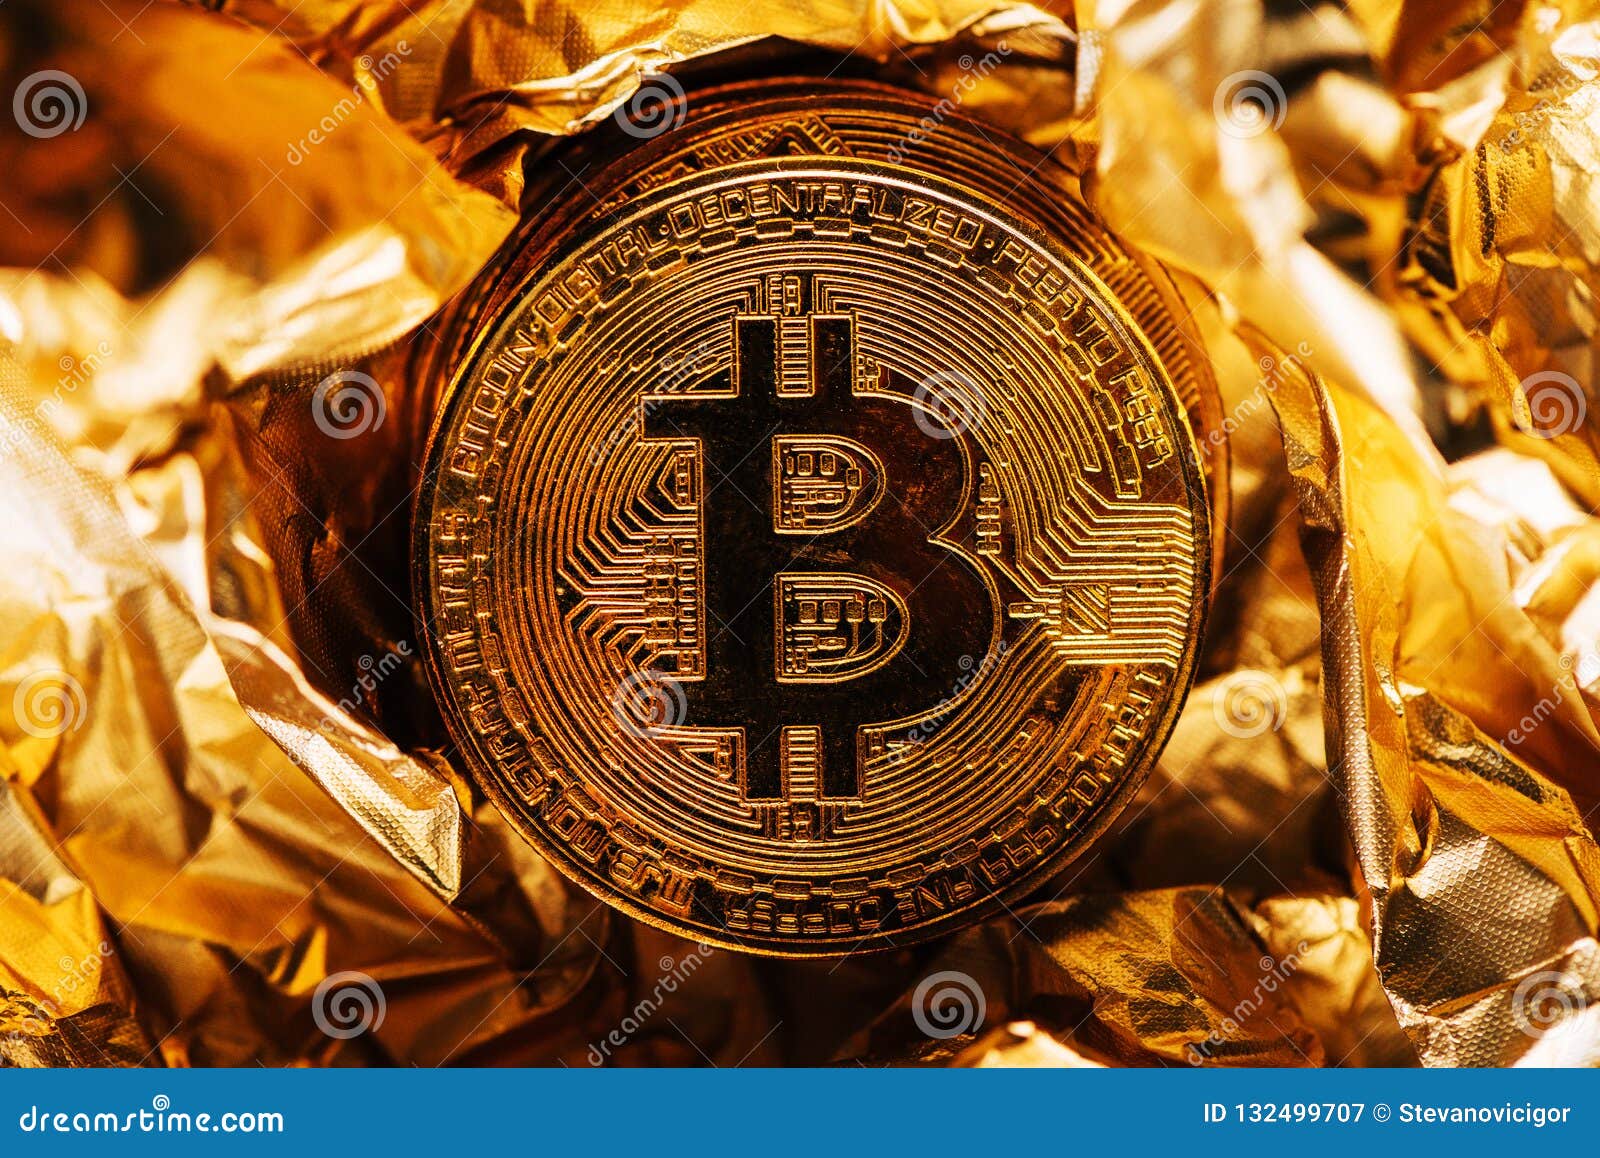 bitcoin gold on blockchain info